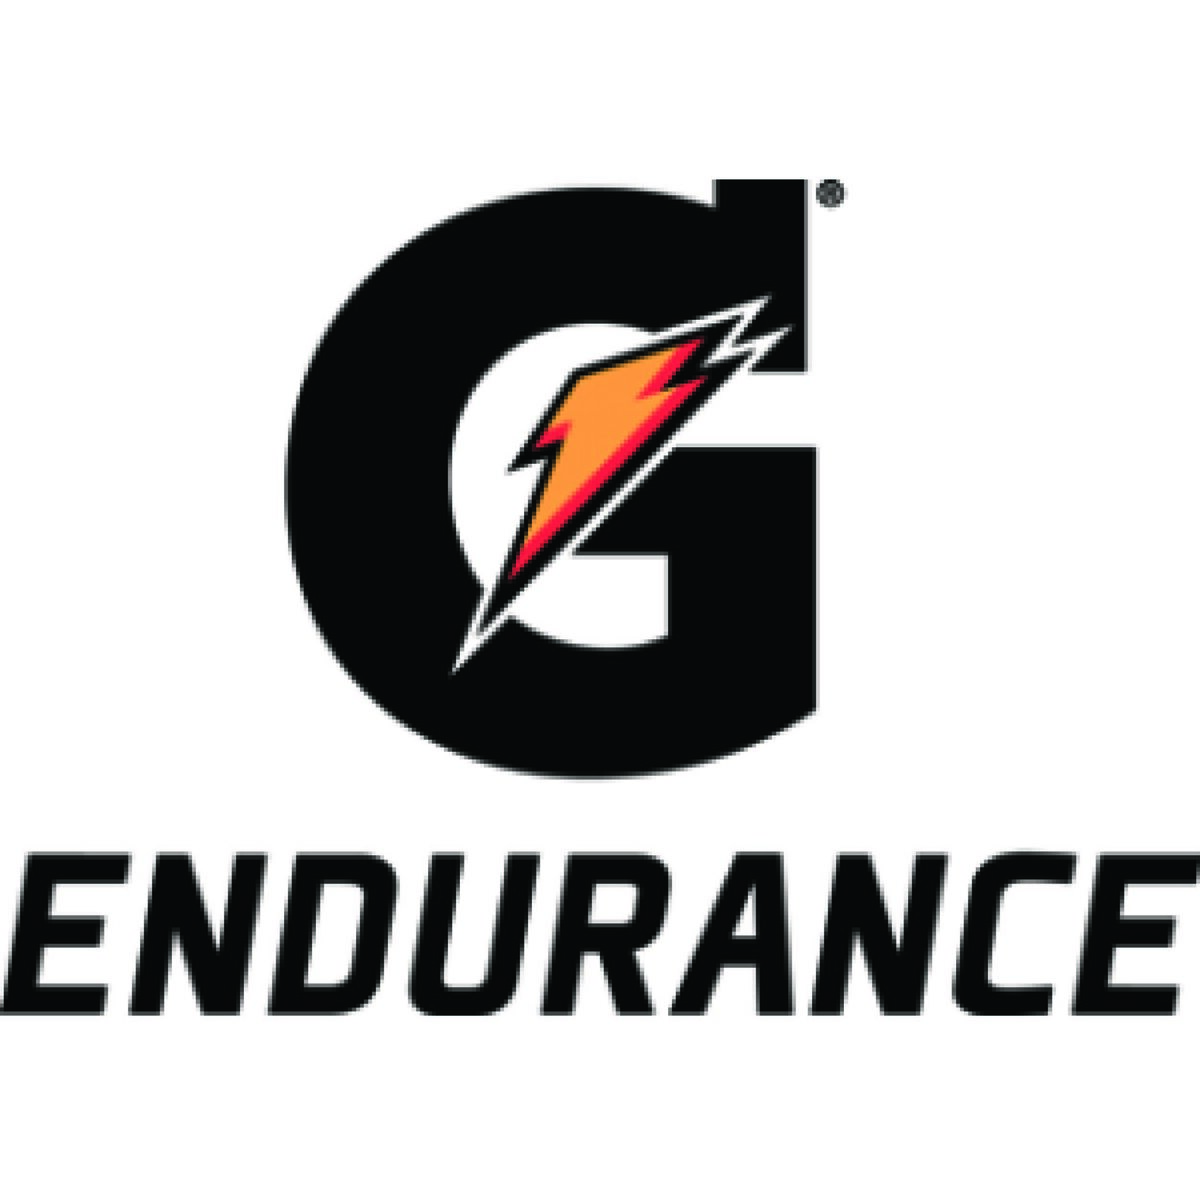 g endurance-01